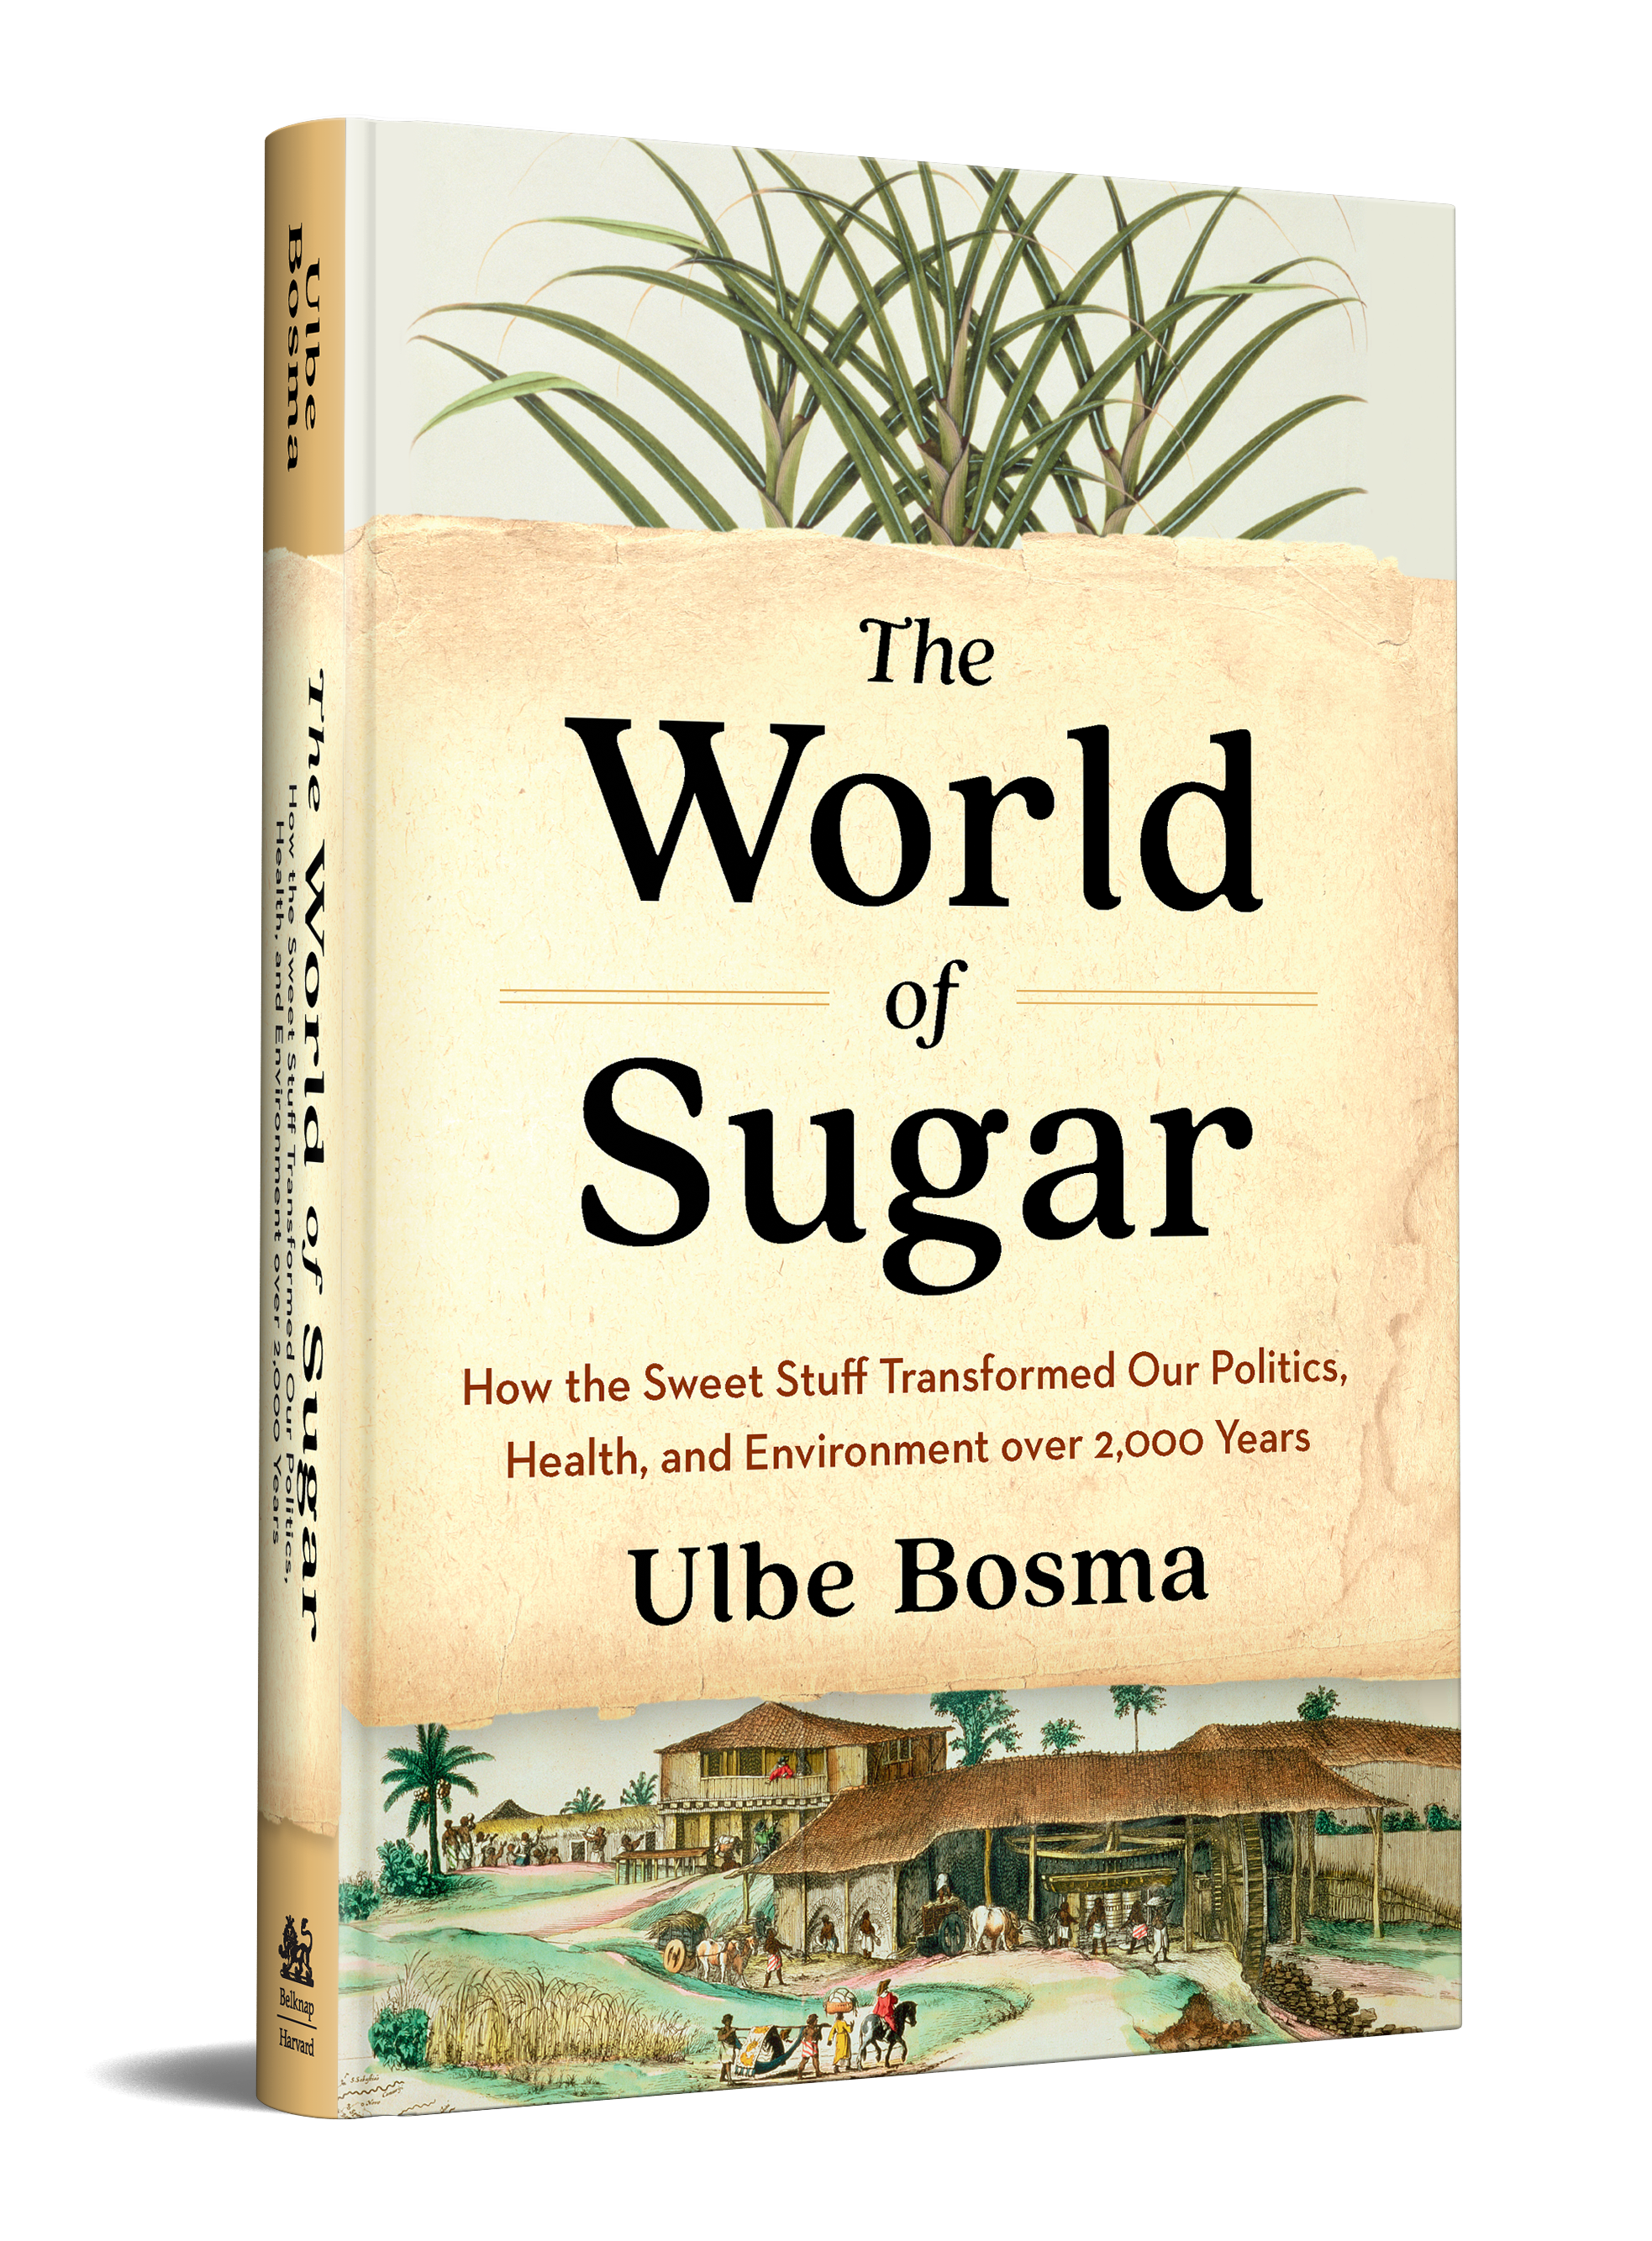 The world of sugar